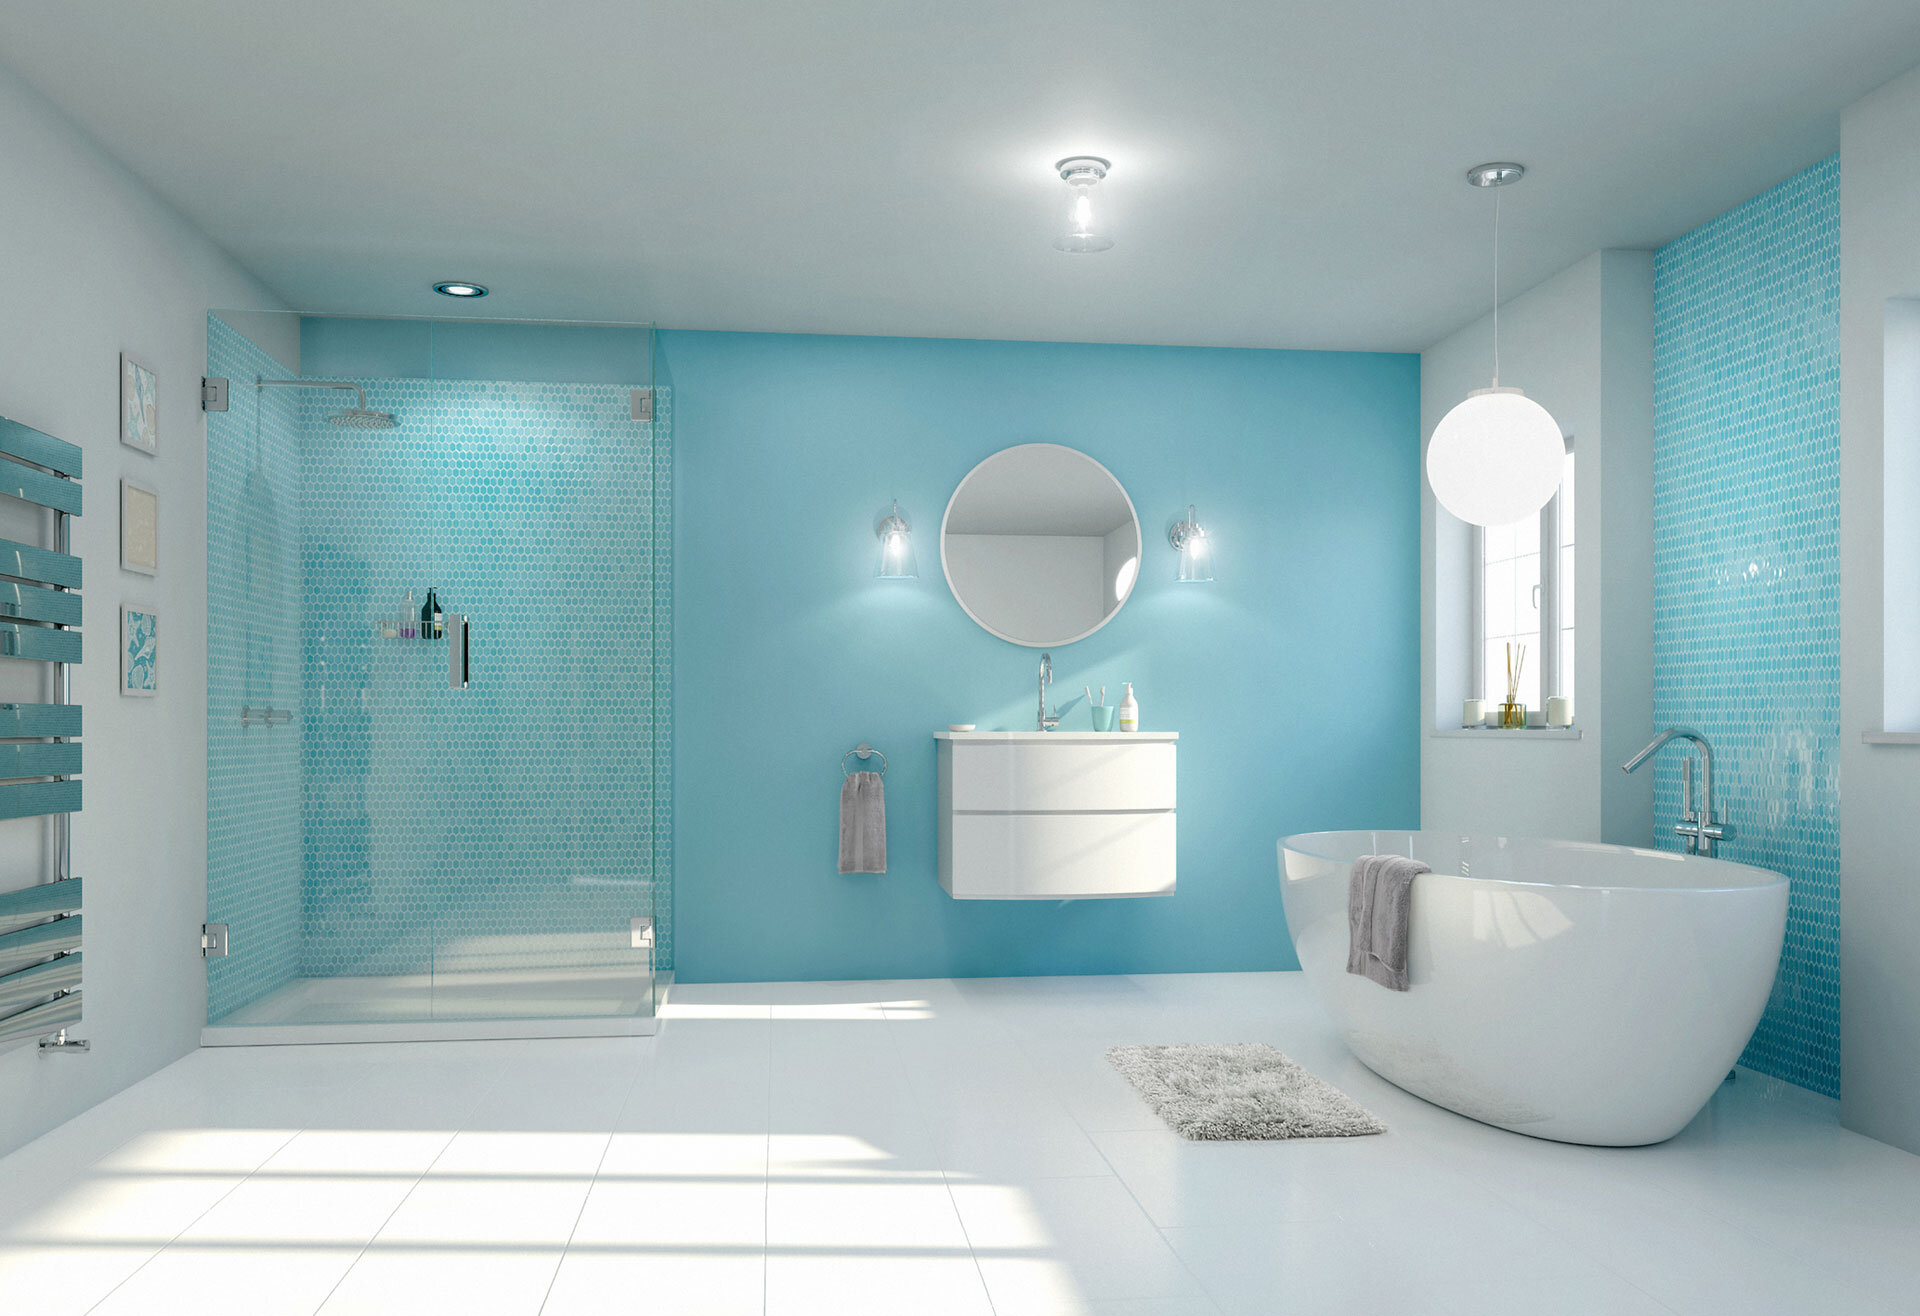 WK360-CGI-Bathroom-egg-shaped-bath-with-aqua-feature-wall-and-shower-enclosure.jpg